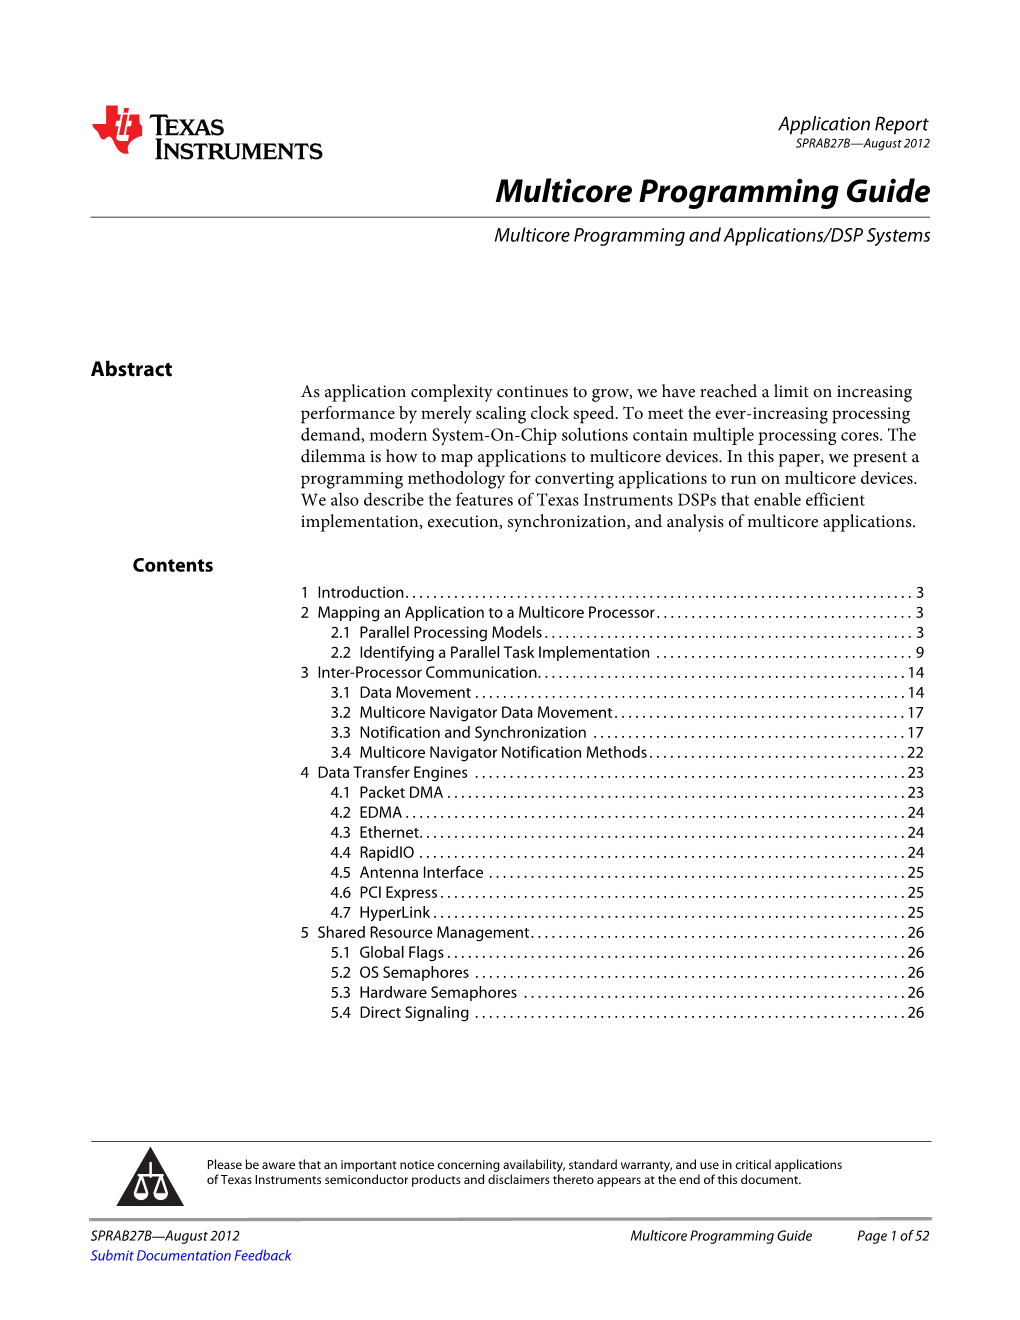 Multicore Programming Guide (Rev. B)